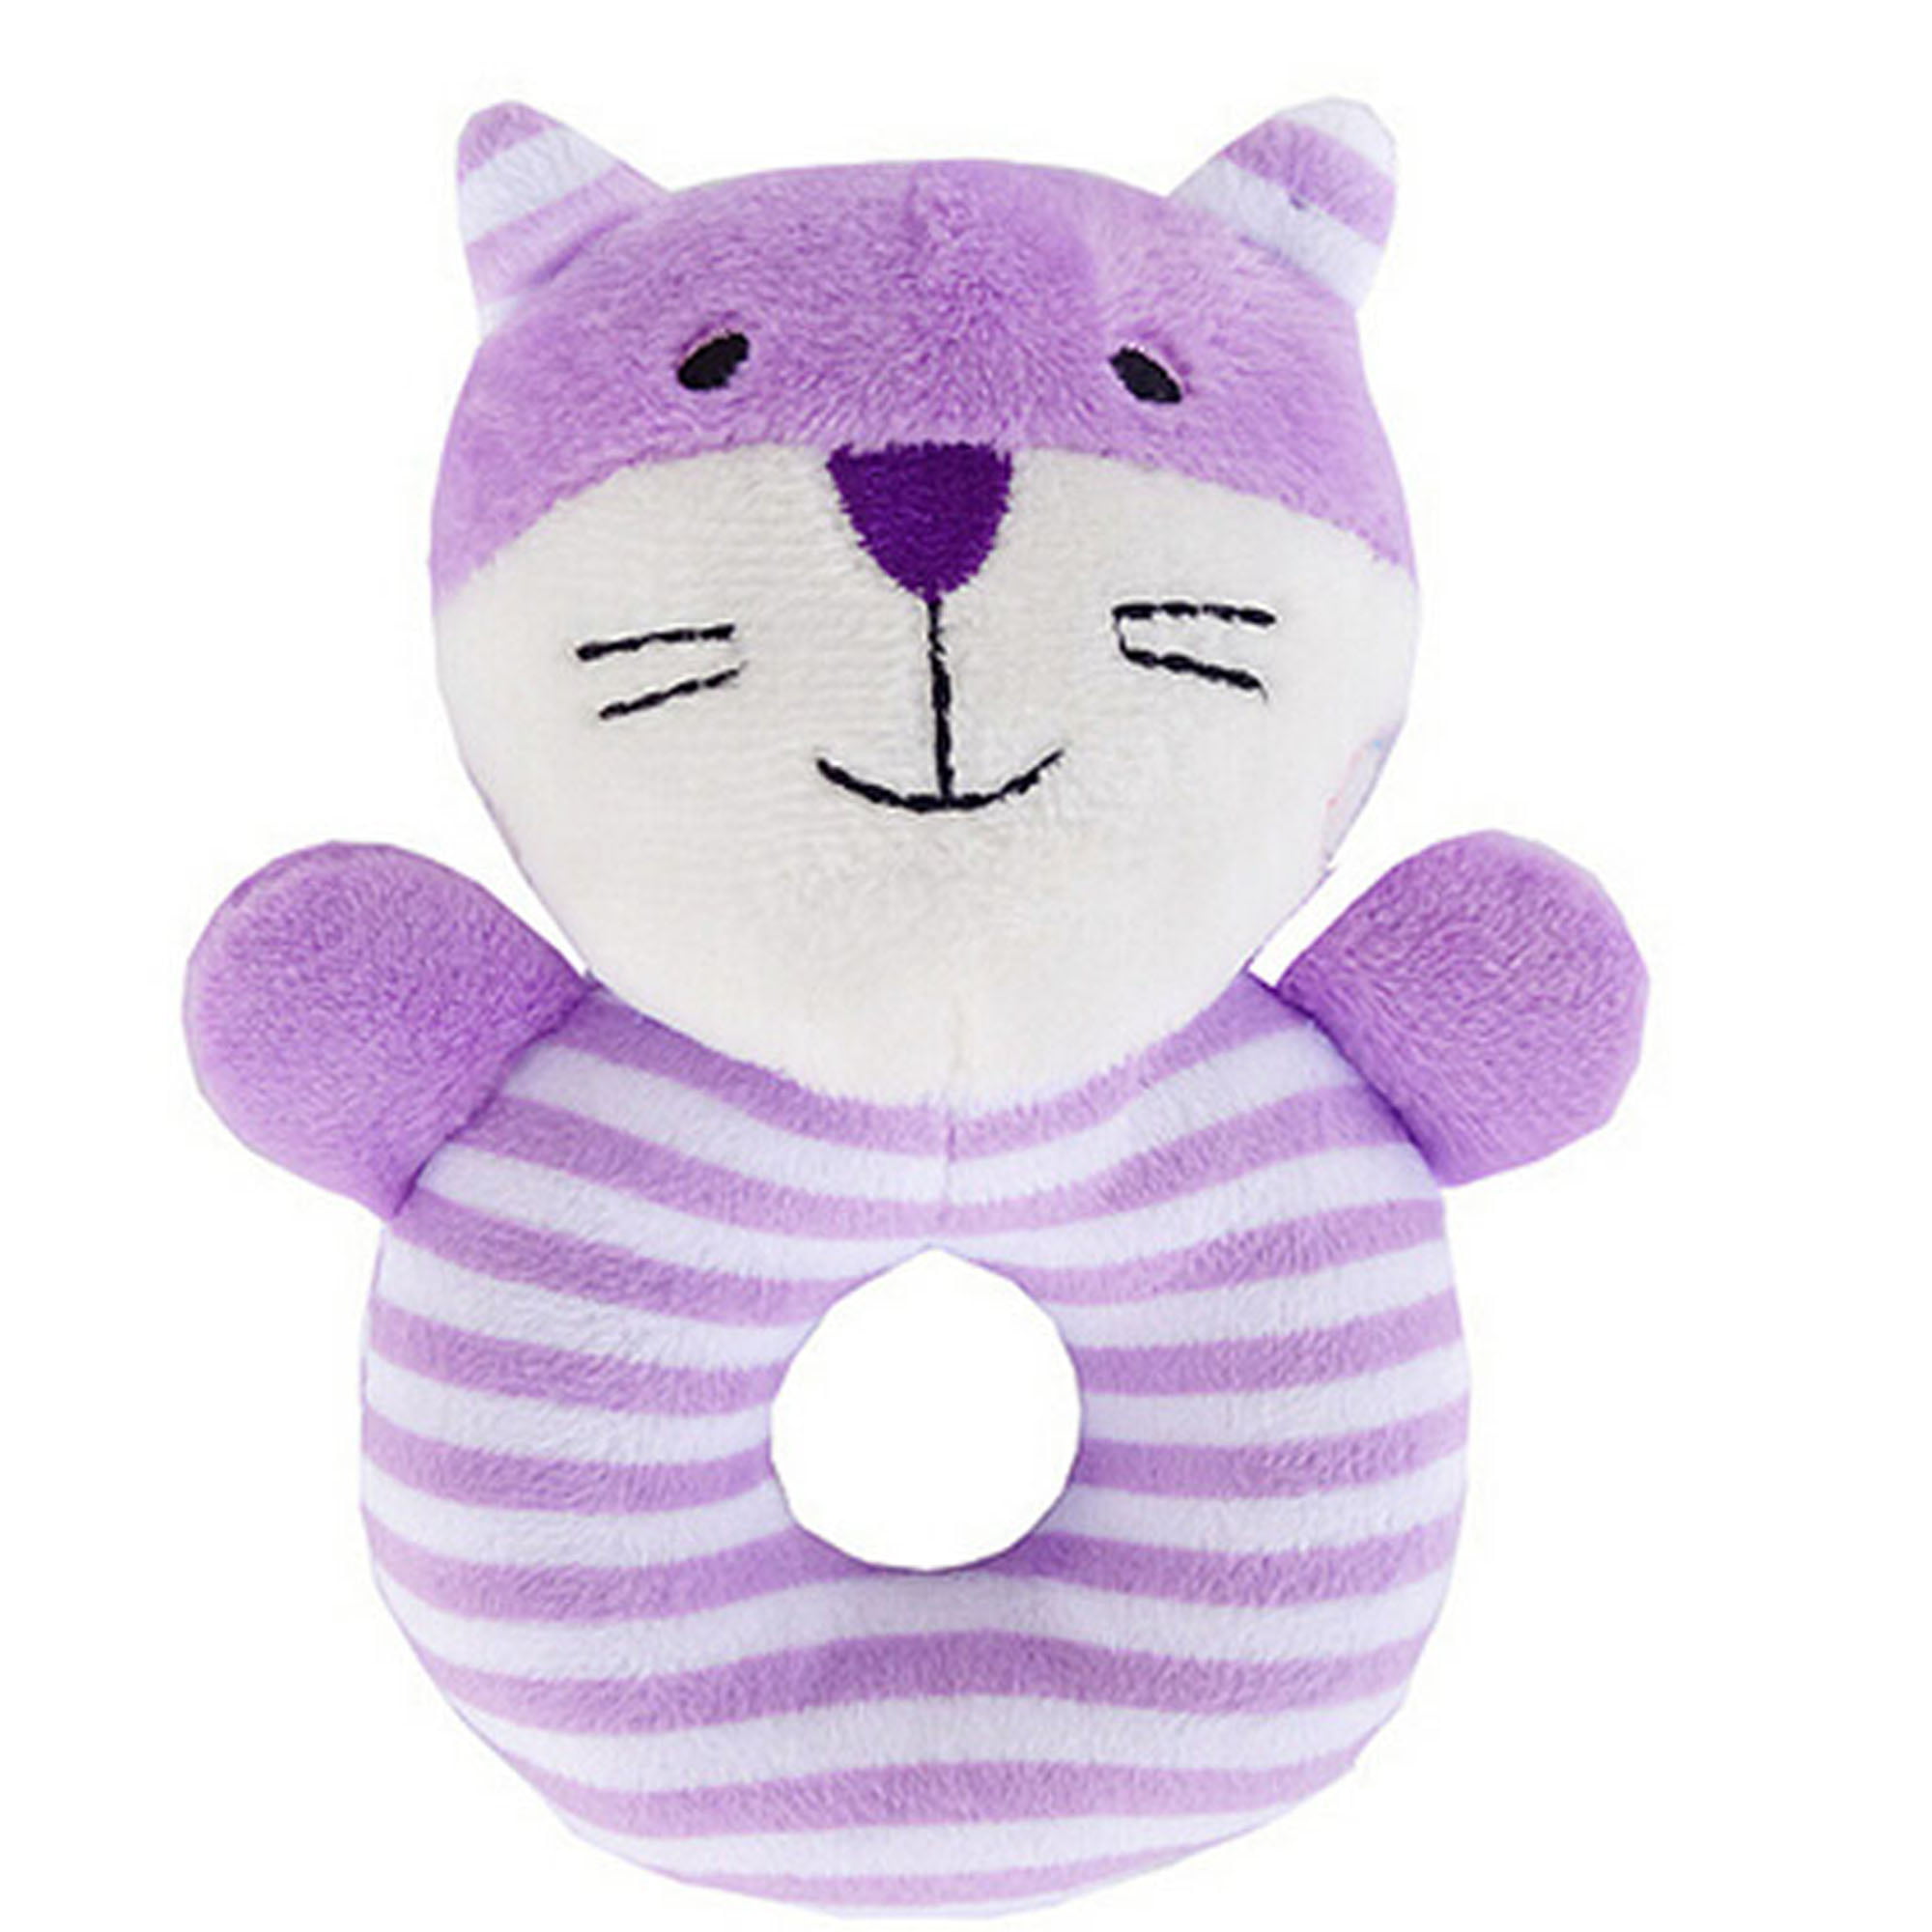 Soft Kids Baby Crib Cot Pram Hanging Rabbit Bear Rattle Bed Stroller Bell Toy US 